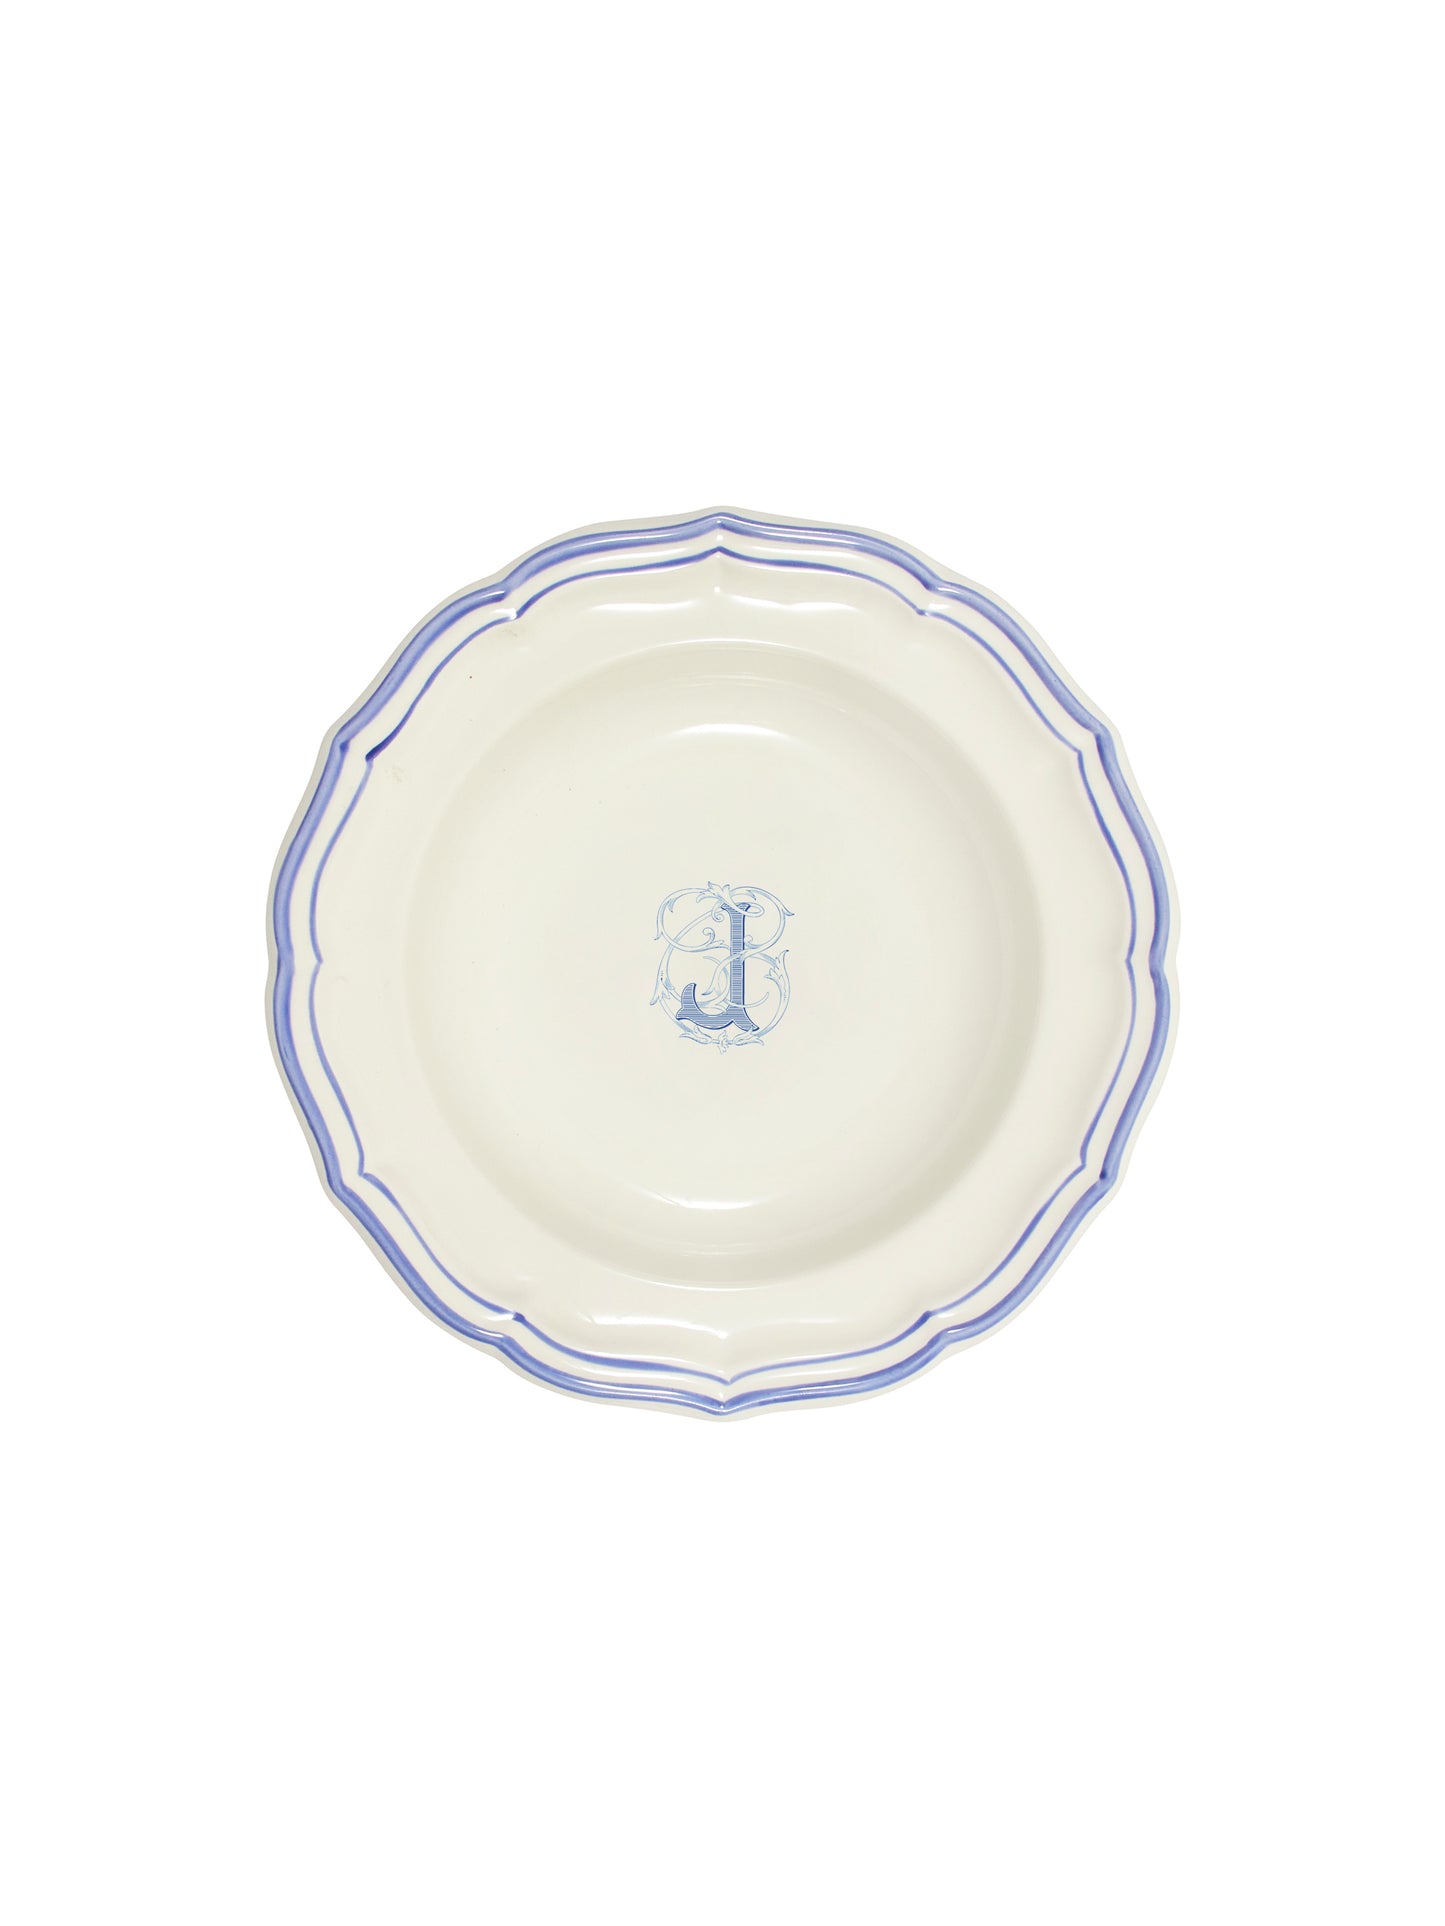 Gien Filet Bleu Monogram Soup Plate J Weston Table